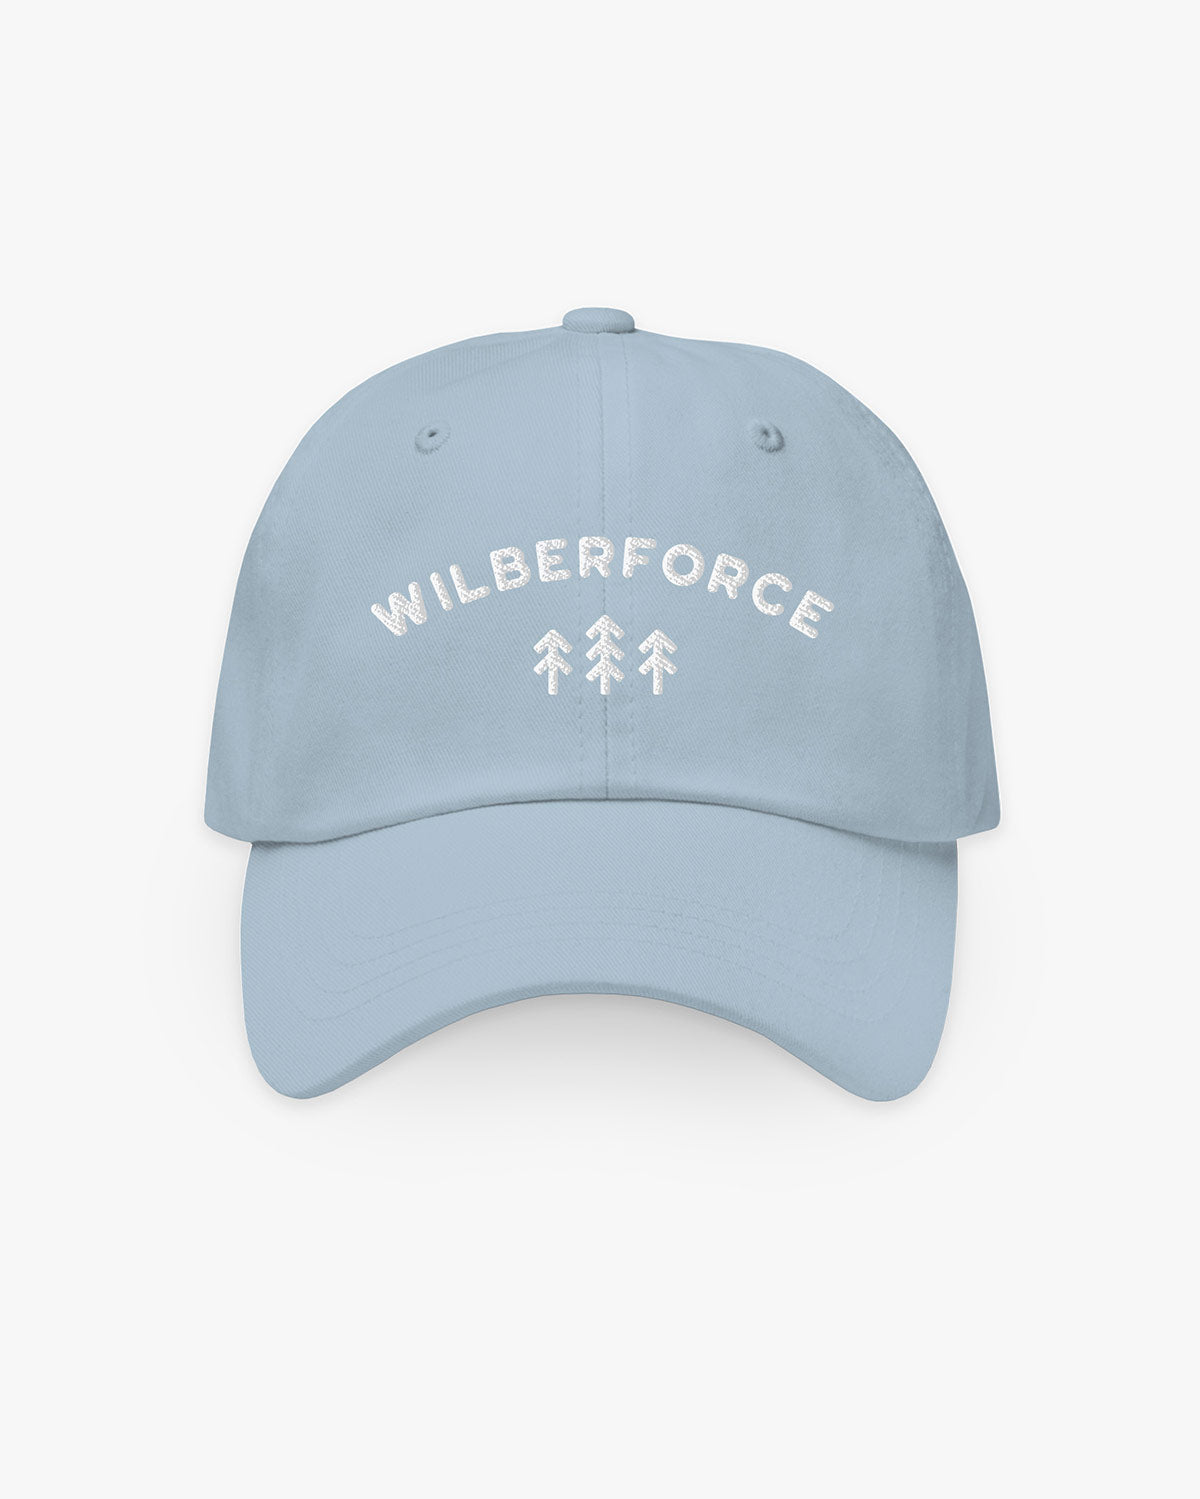 Trees - Wilberforce - Hat